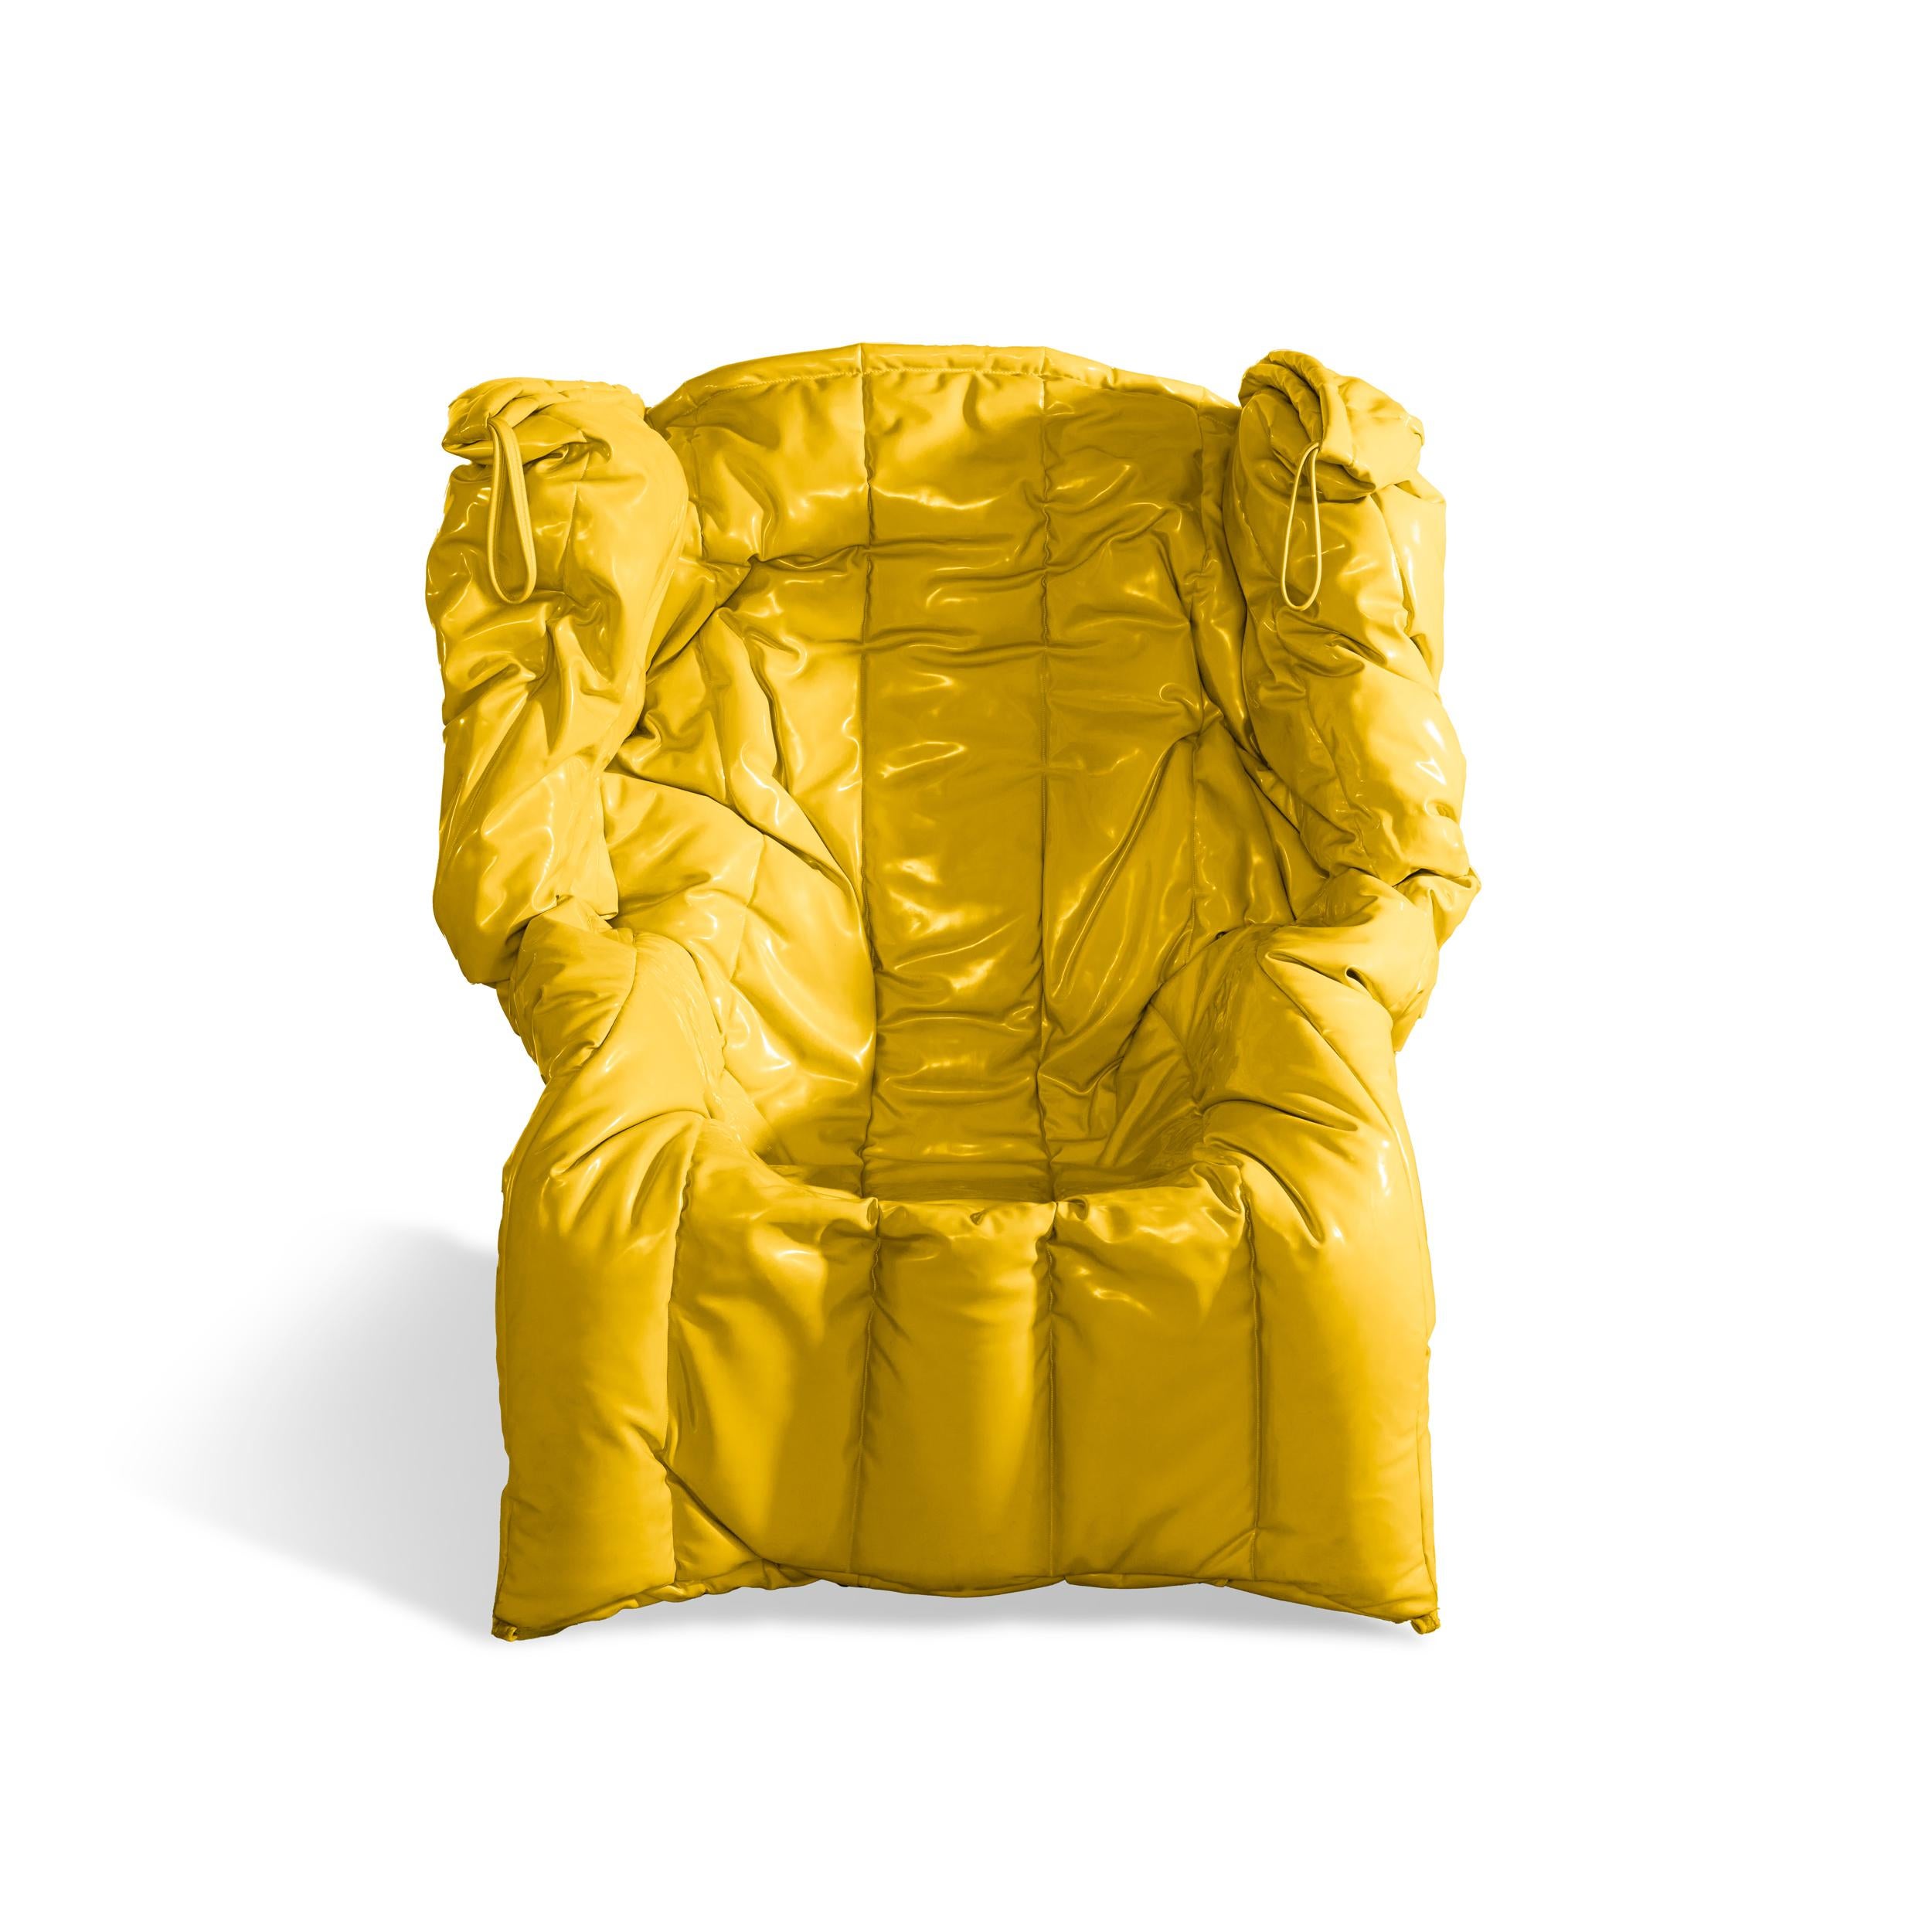 Italian Shadow Armchair by Gaetano Pesce - Yellow For Sale